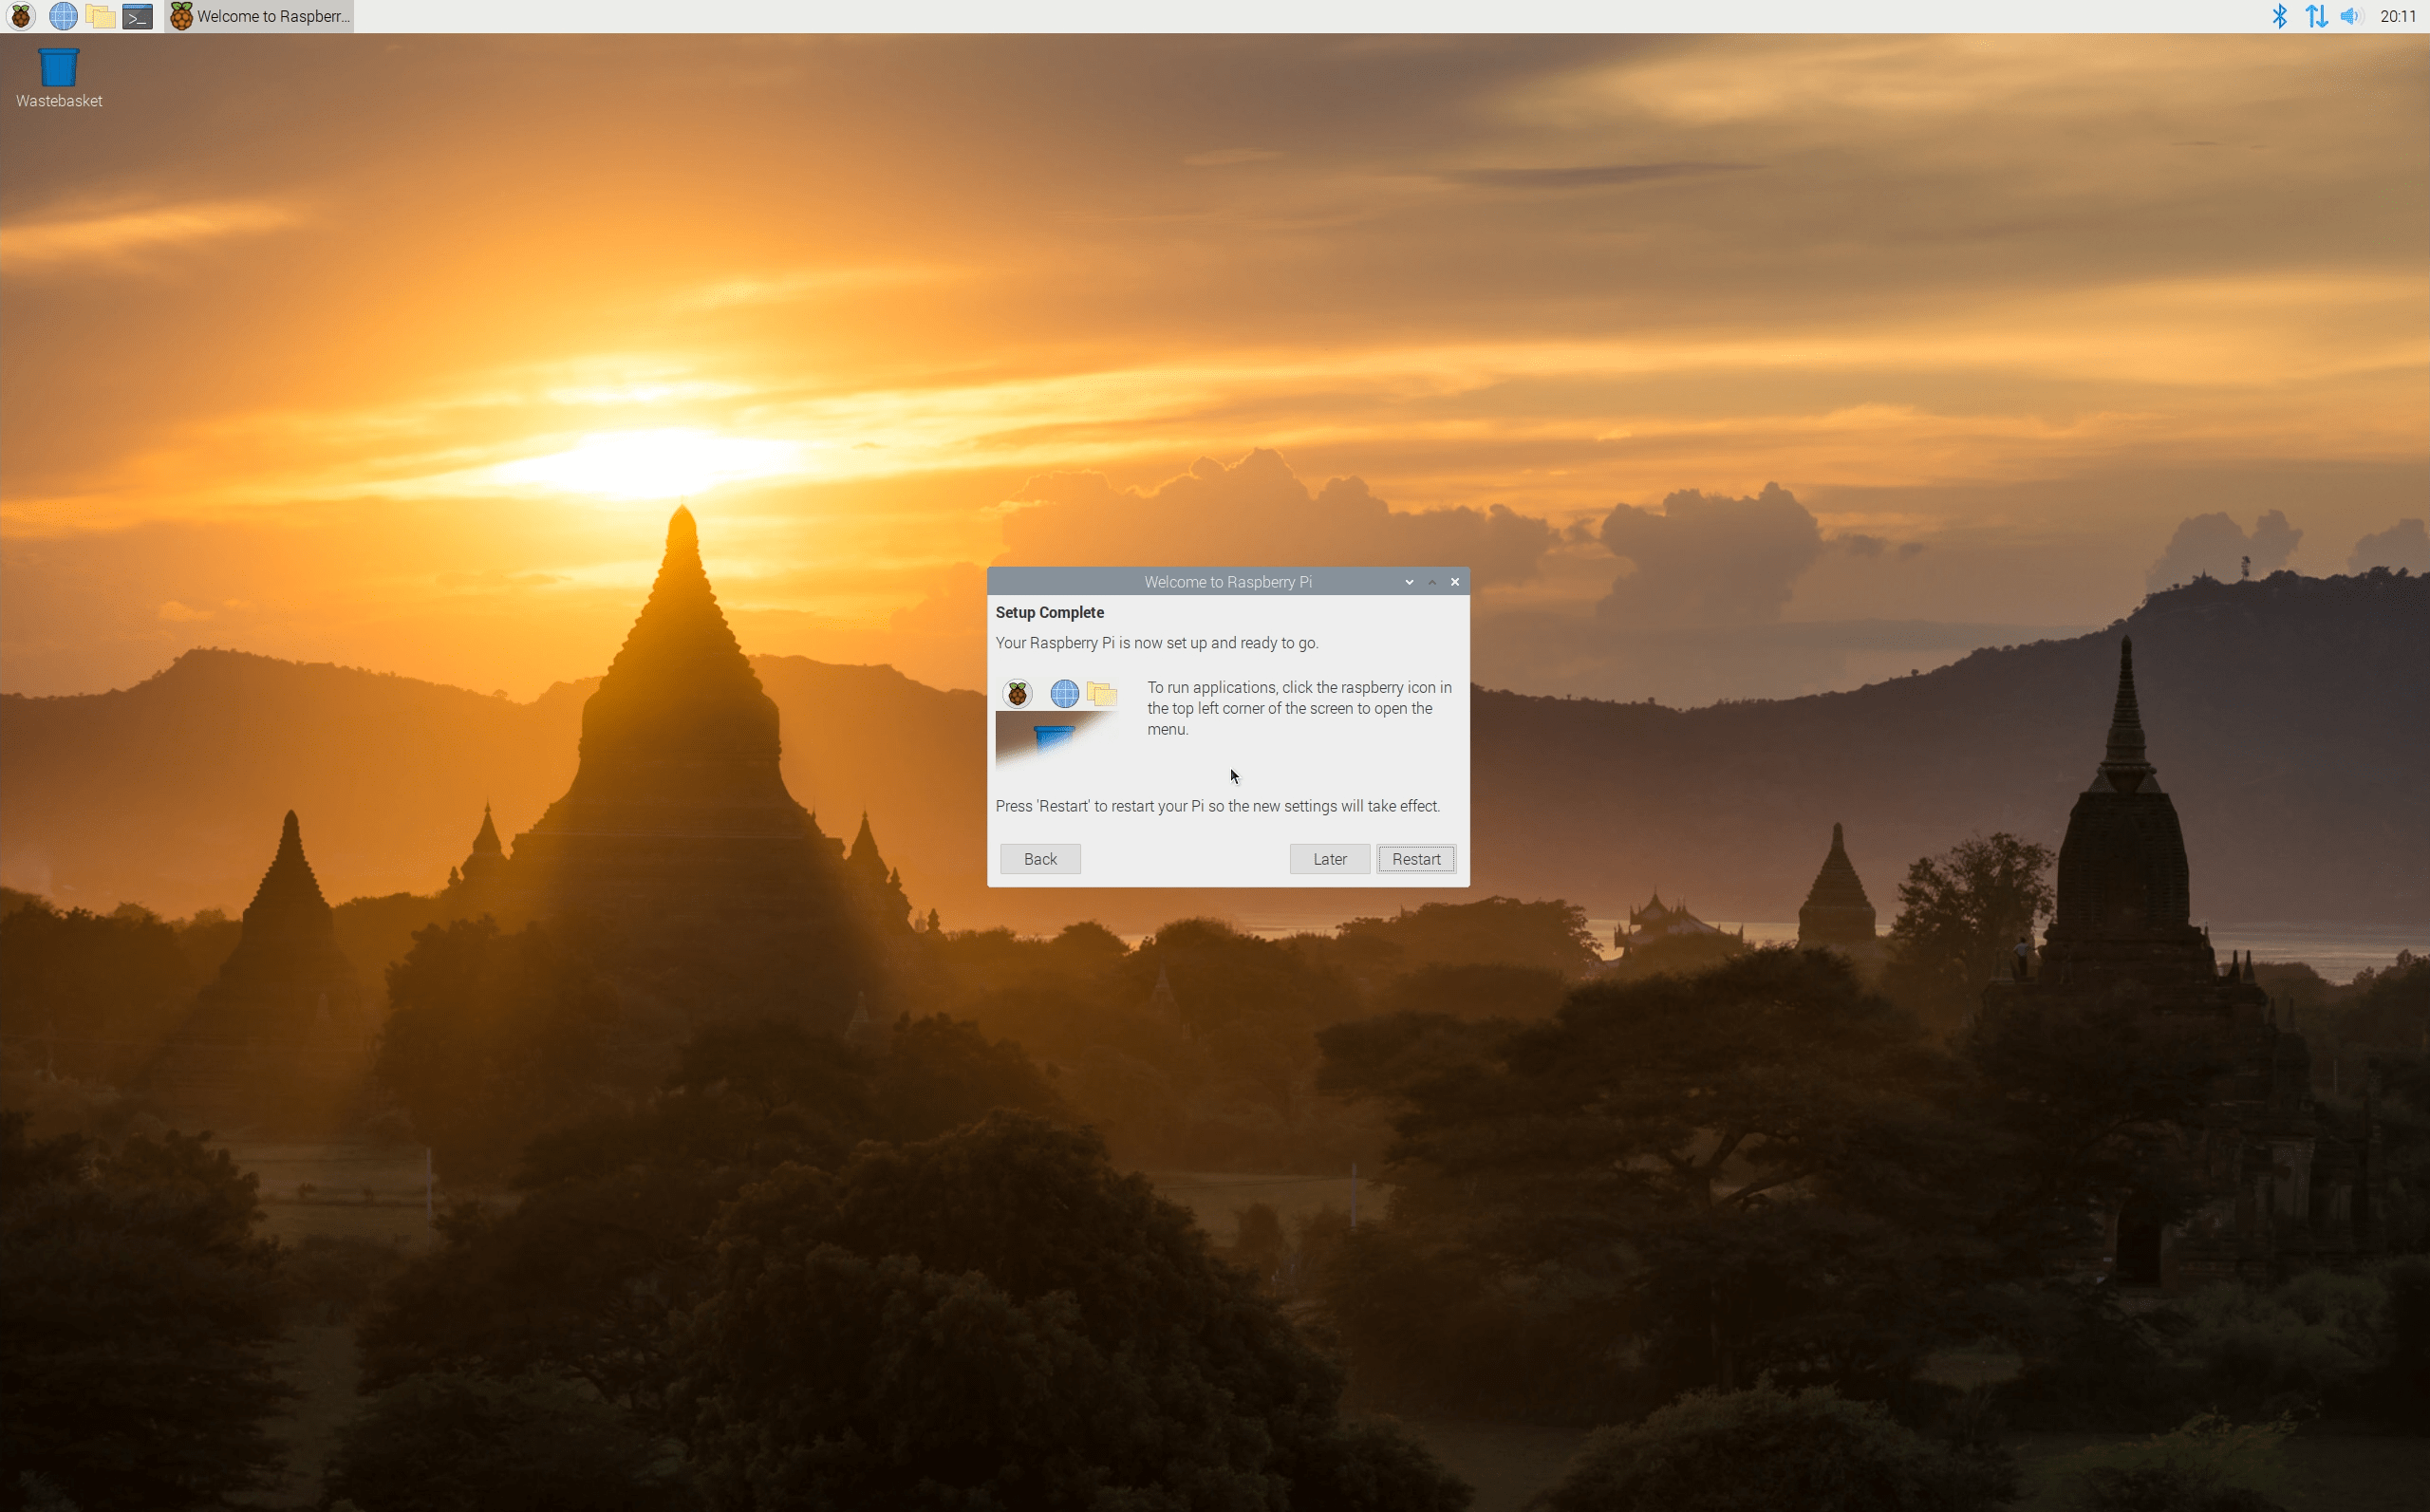 Raspberry Pi OS Desktop